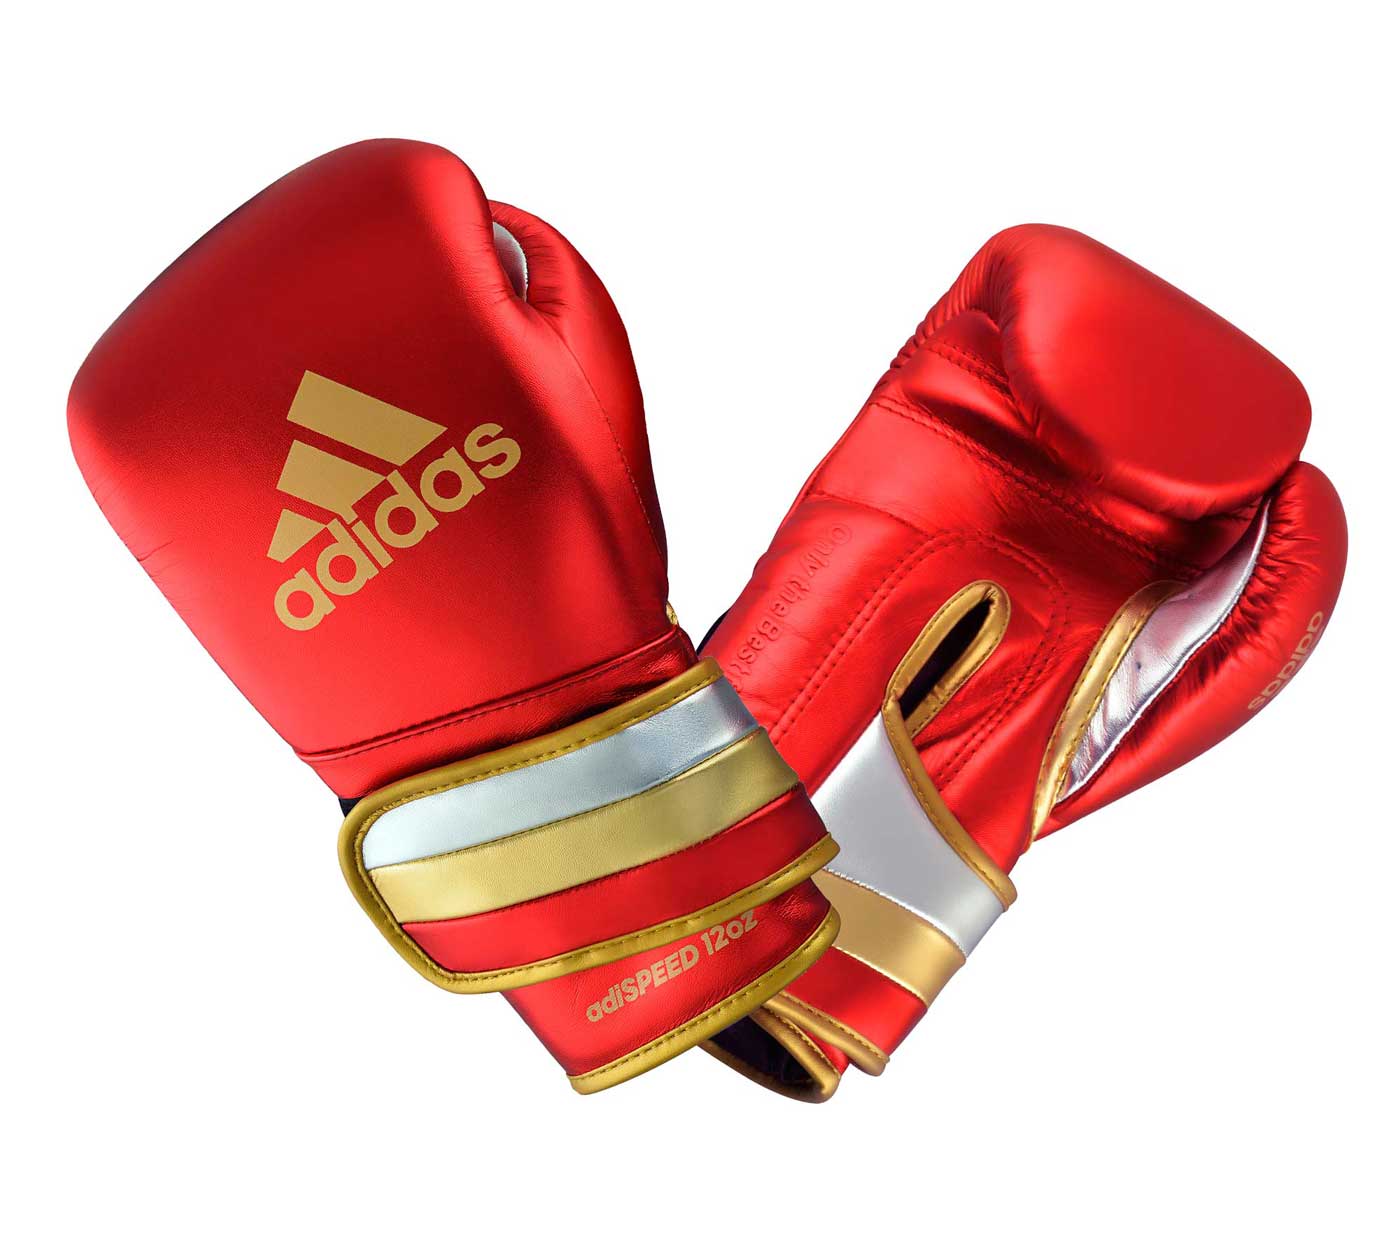 Перчатки боксерские adidas AdiSpeed Metallic красно-золото-серебристые 16 унц. артикул adiSBG501ProM